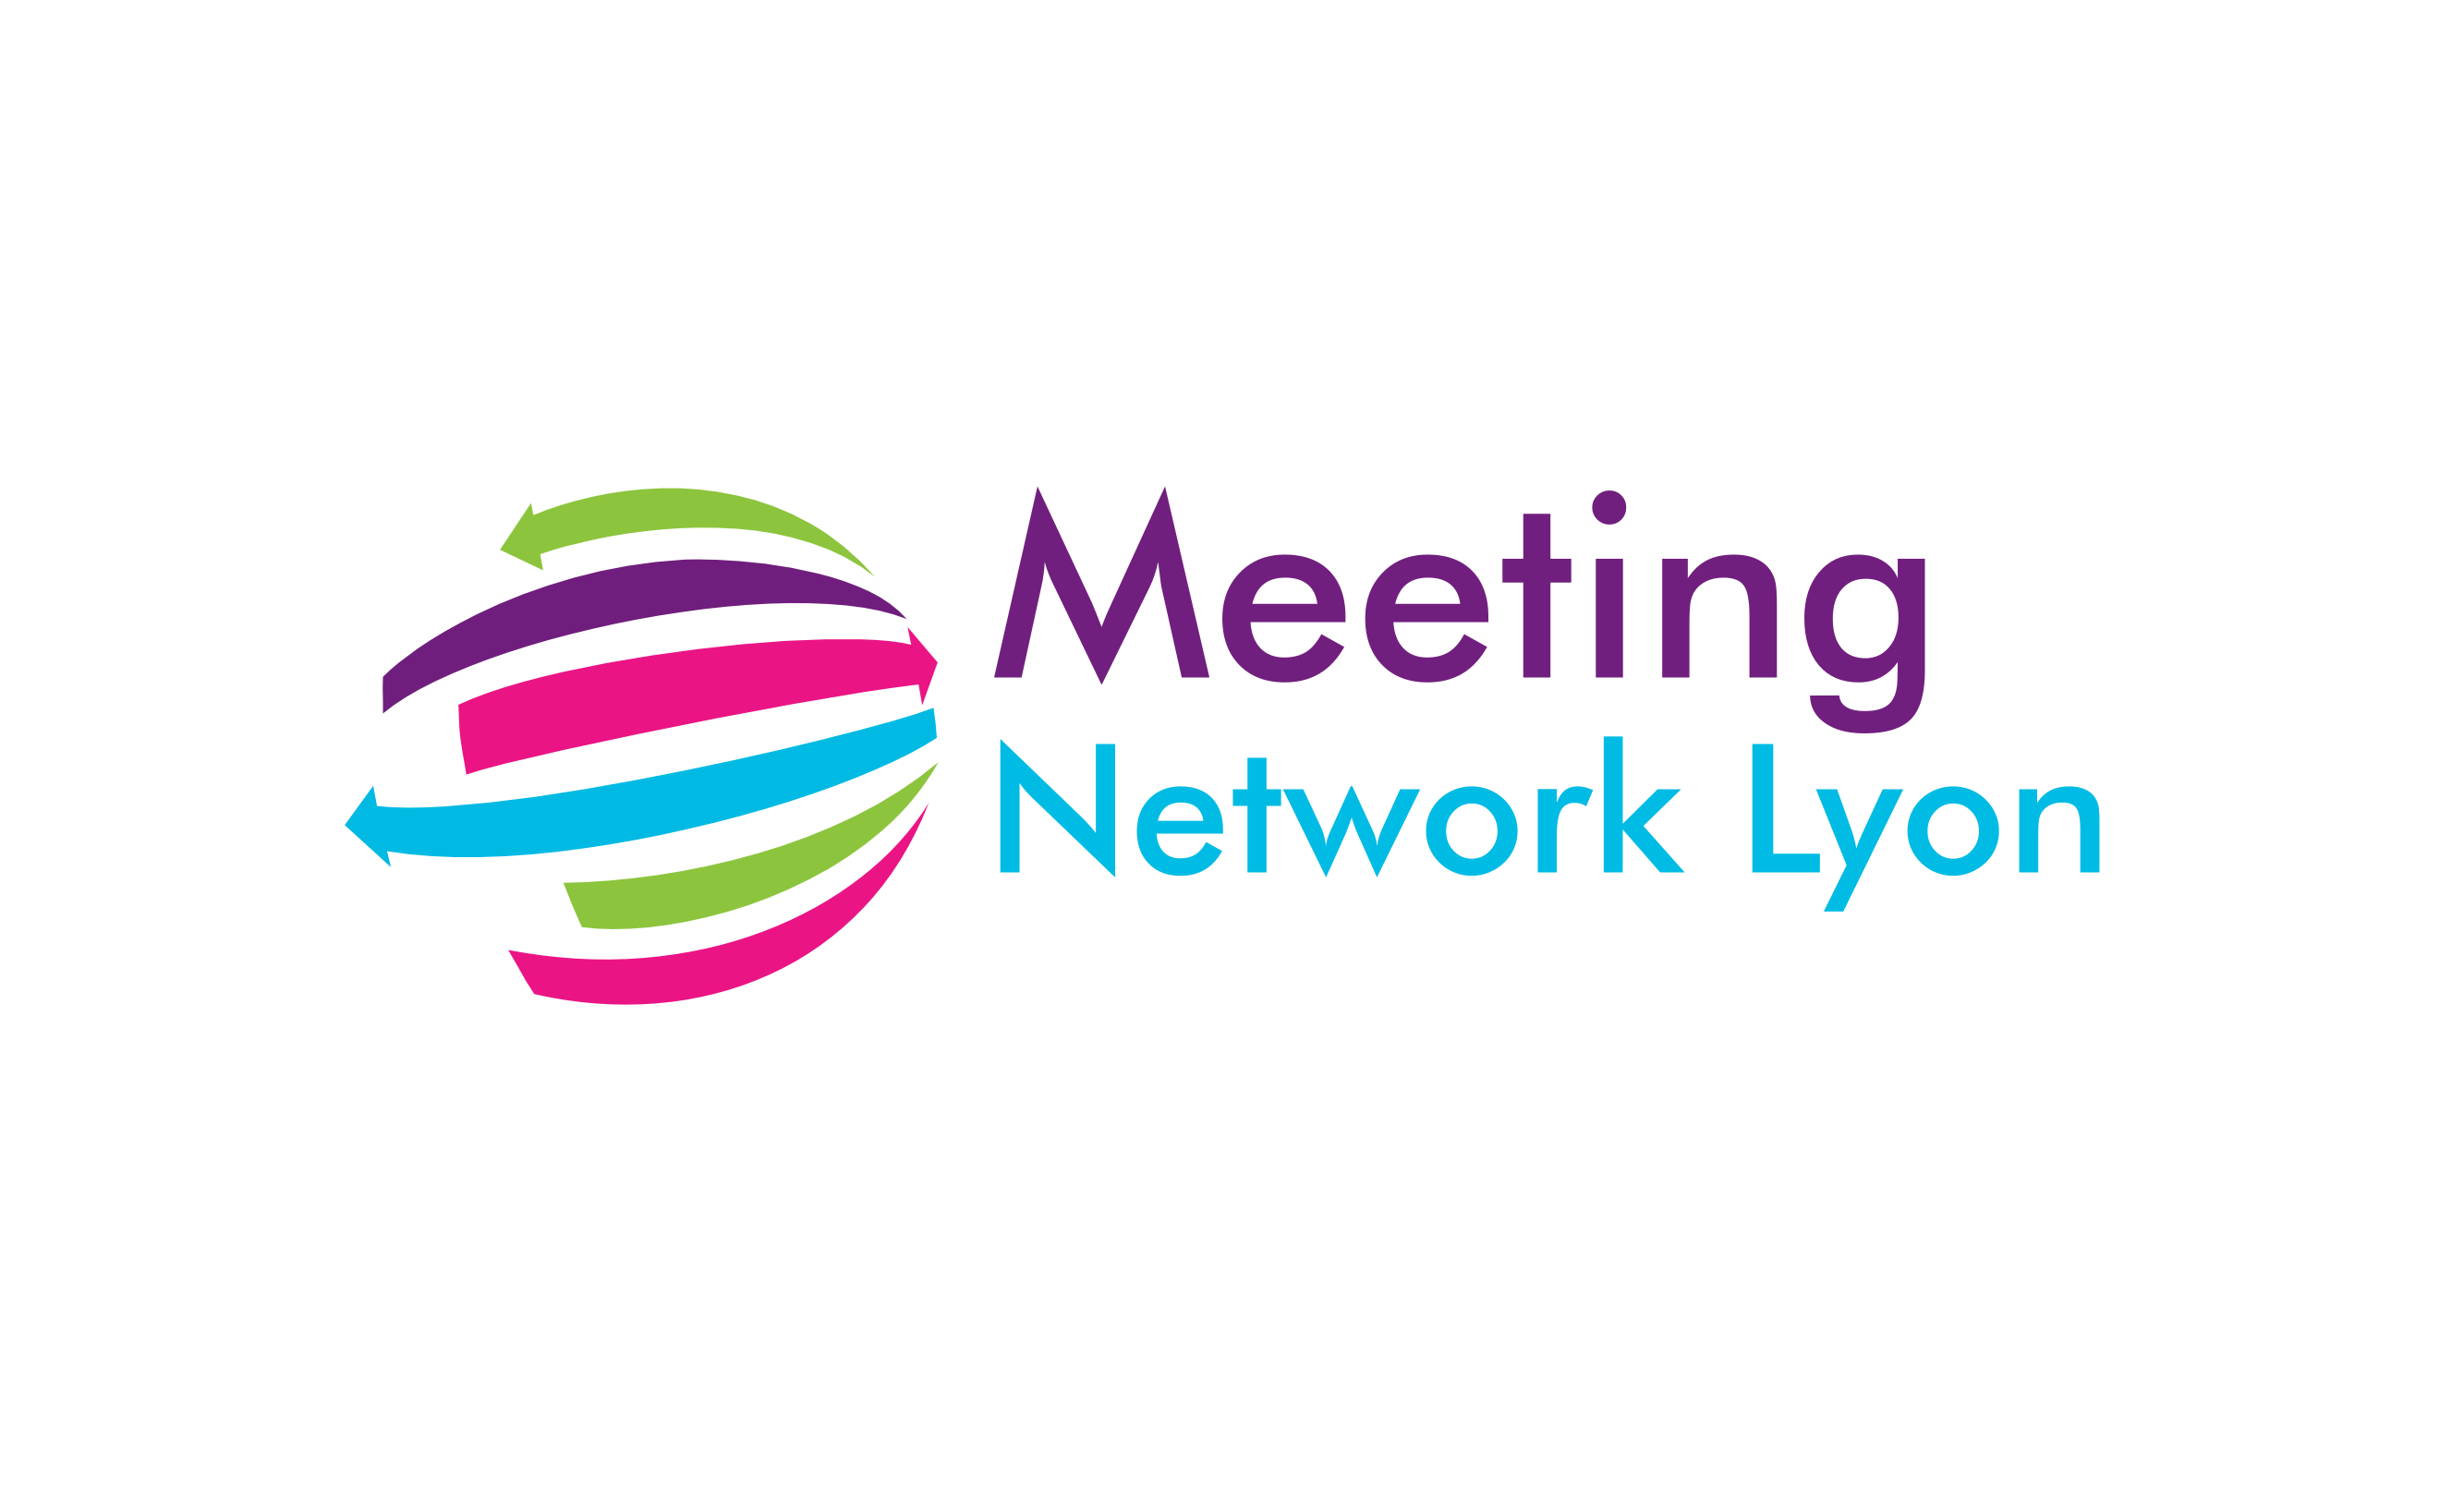 Meeting network Lyon